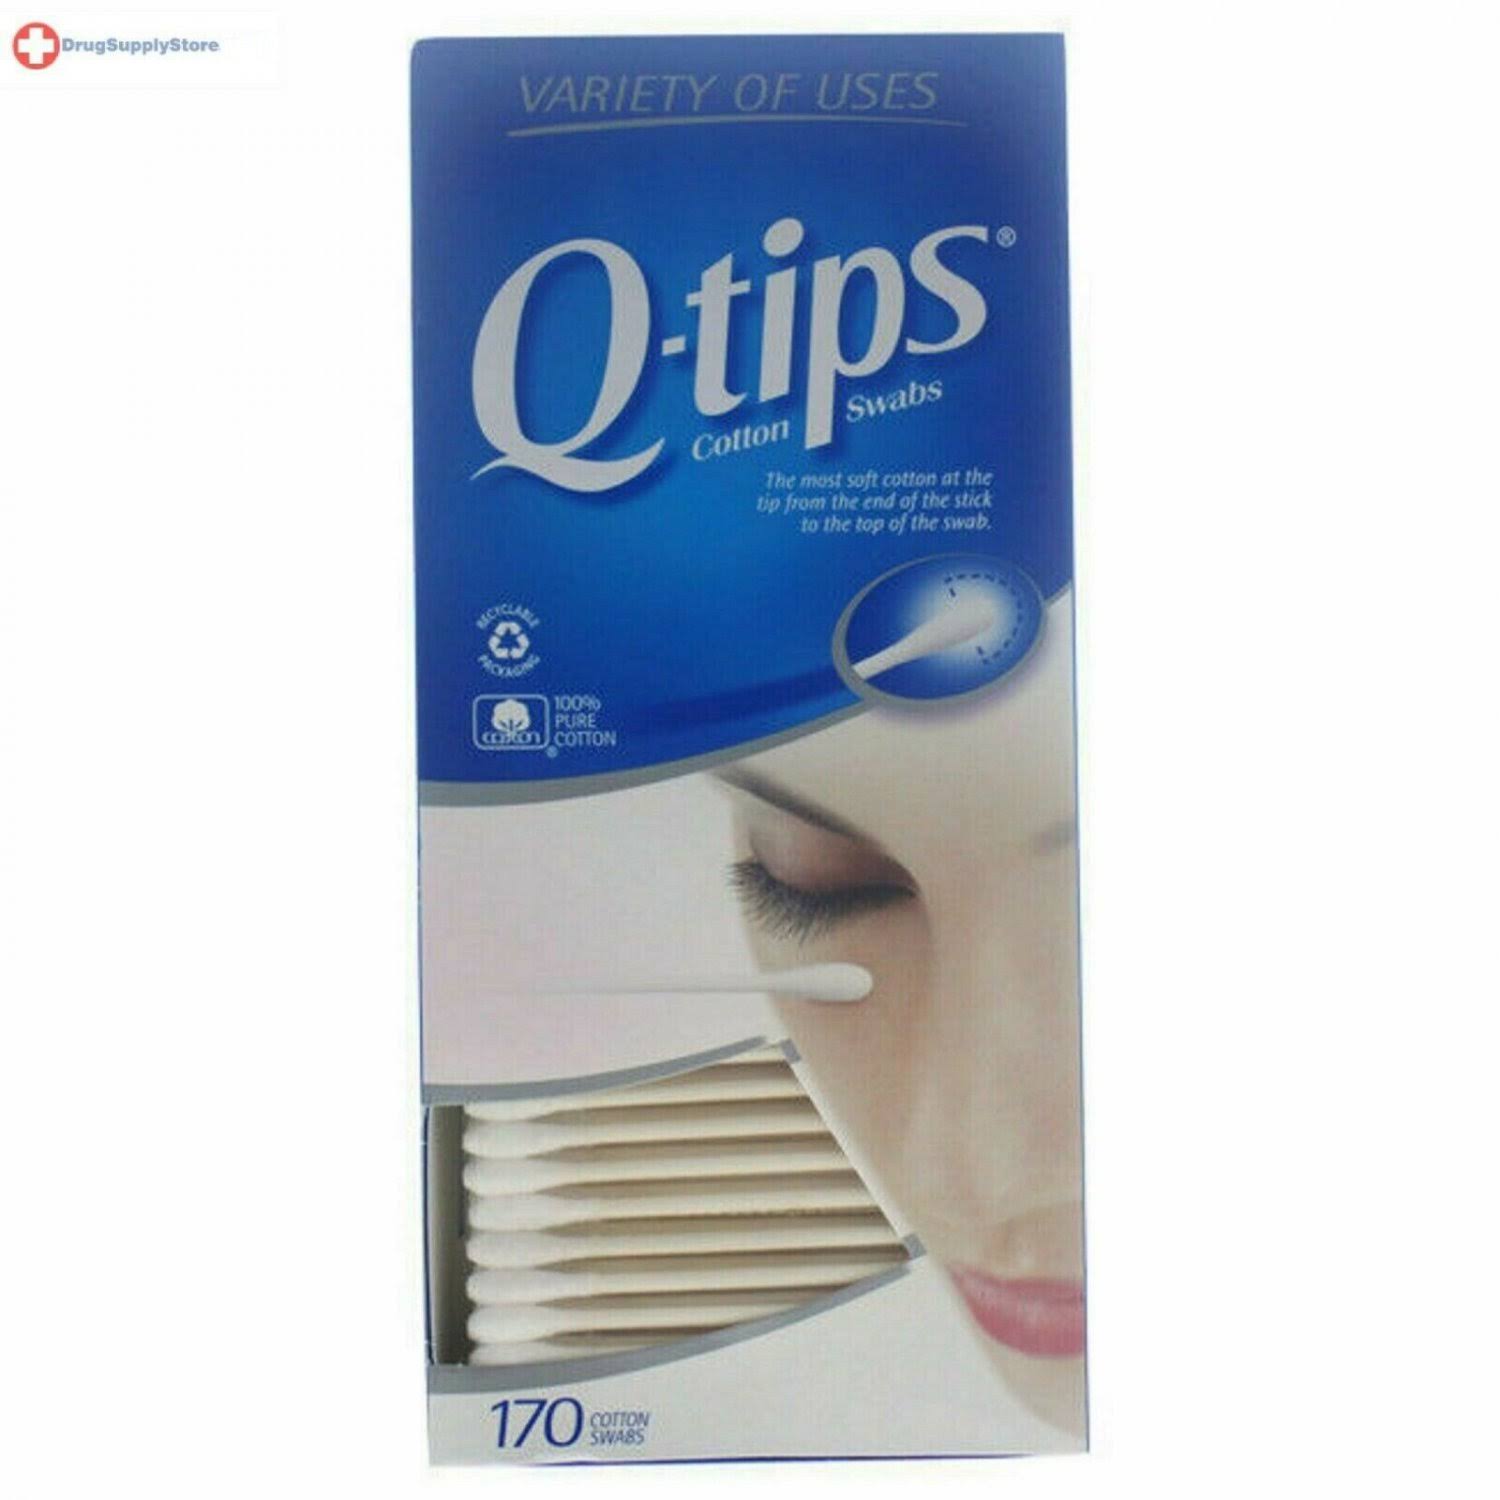 Q-tips Cotton Swabs - x170